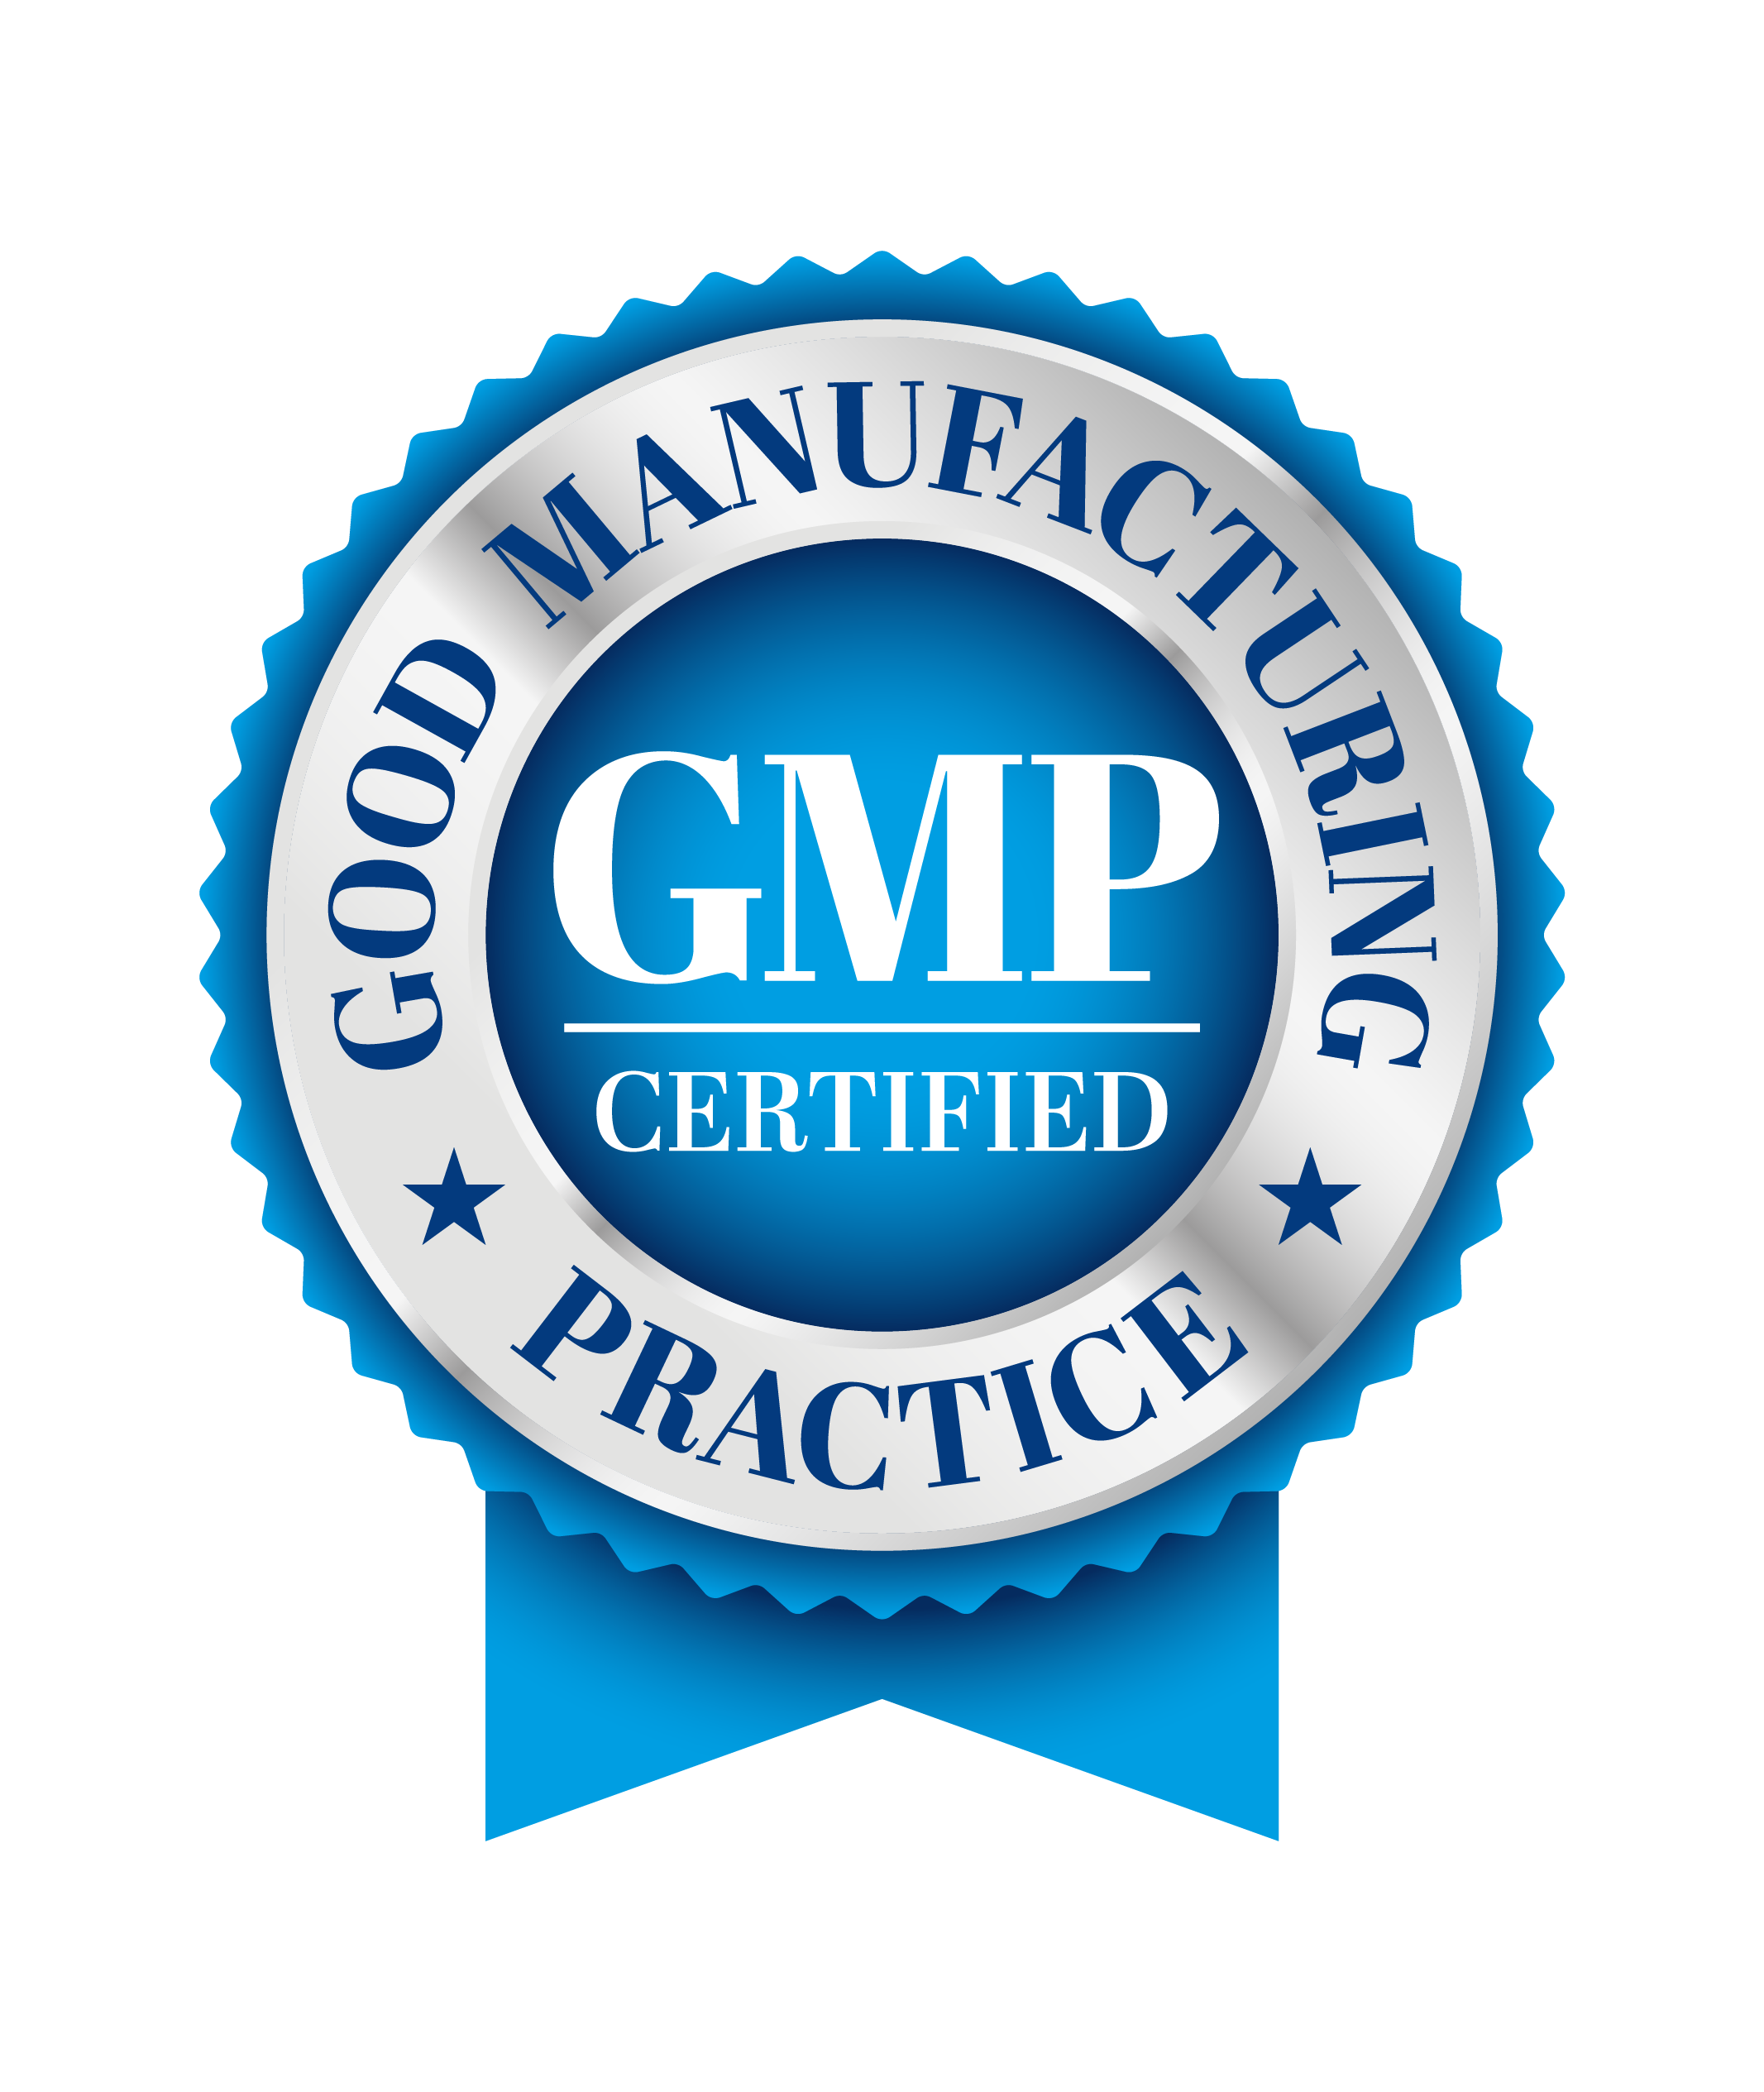 gmp-badge-stock-illustration-download-image-now-logo-badge